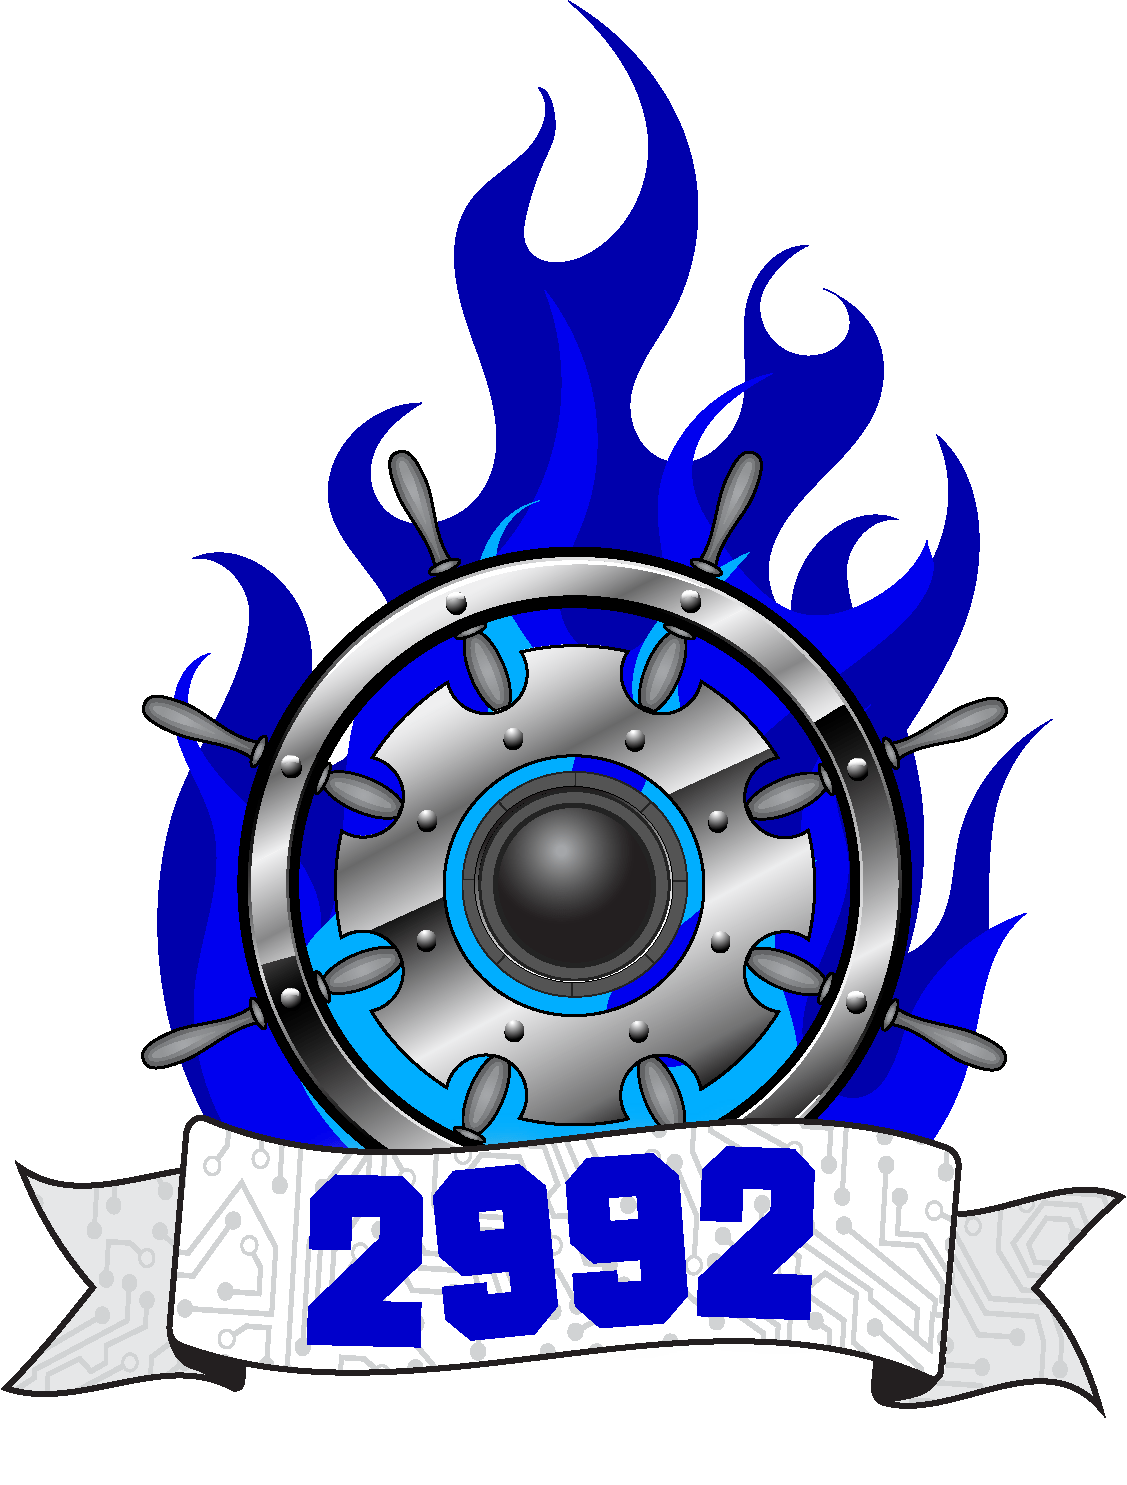 2992-Logo-Final-1.png